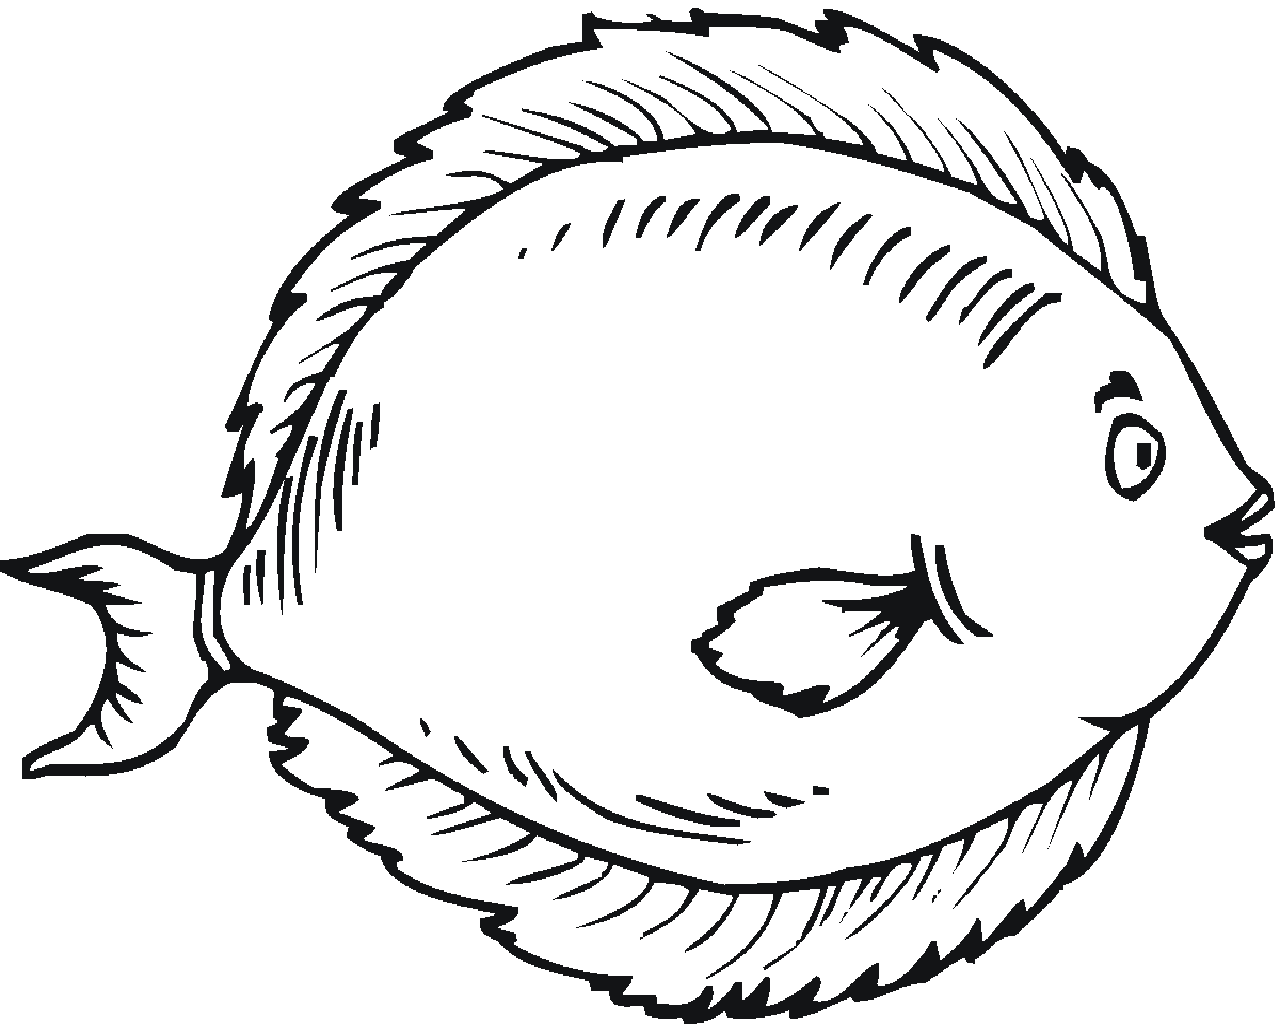 Fish Line Drawings